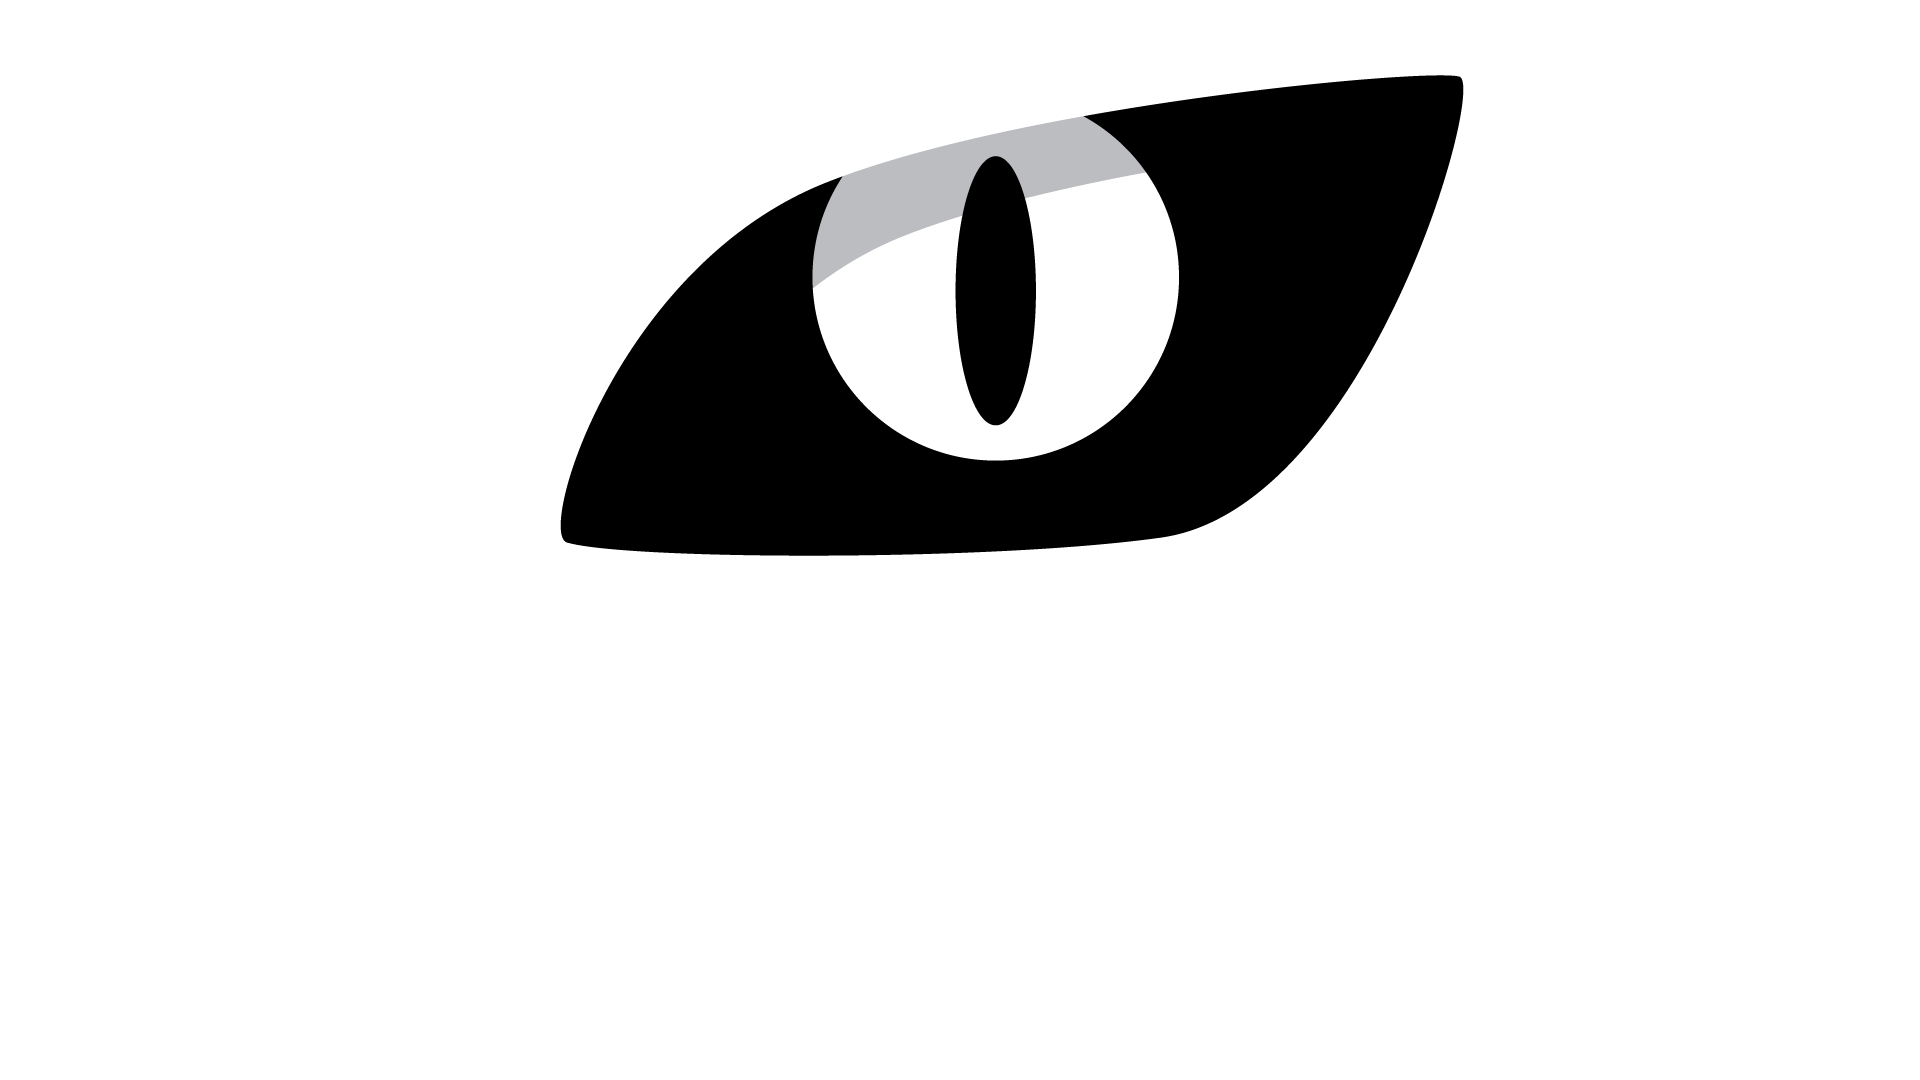 the vysual